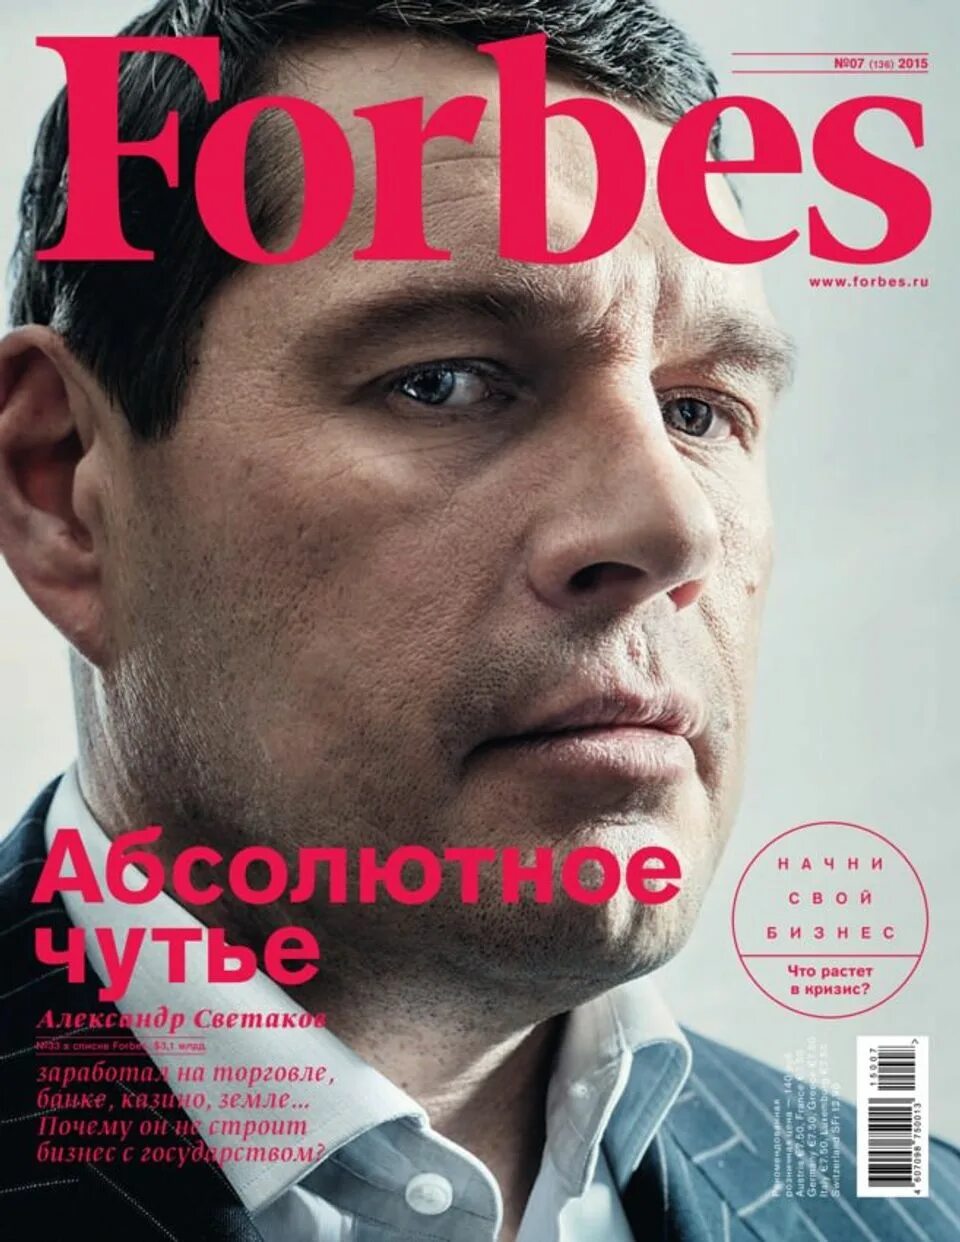 Журналы 2015. Forbes обложка. Обложка журнала Forbes. Обложка бизнес журнала. Журнал форбс.